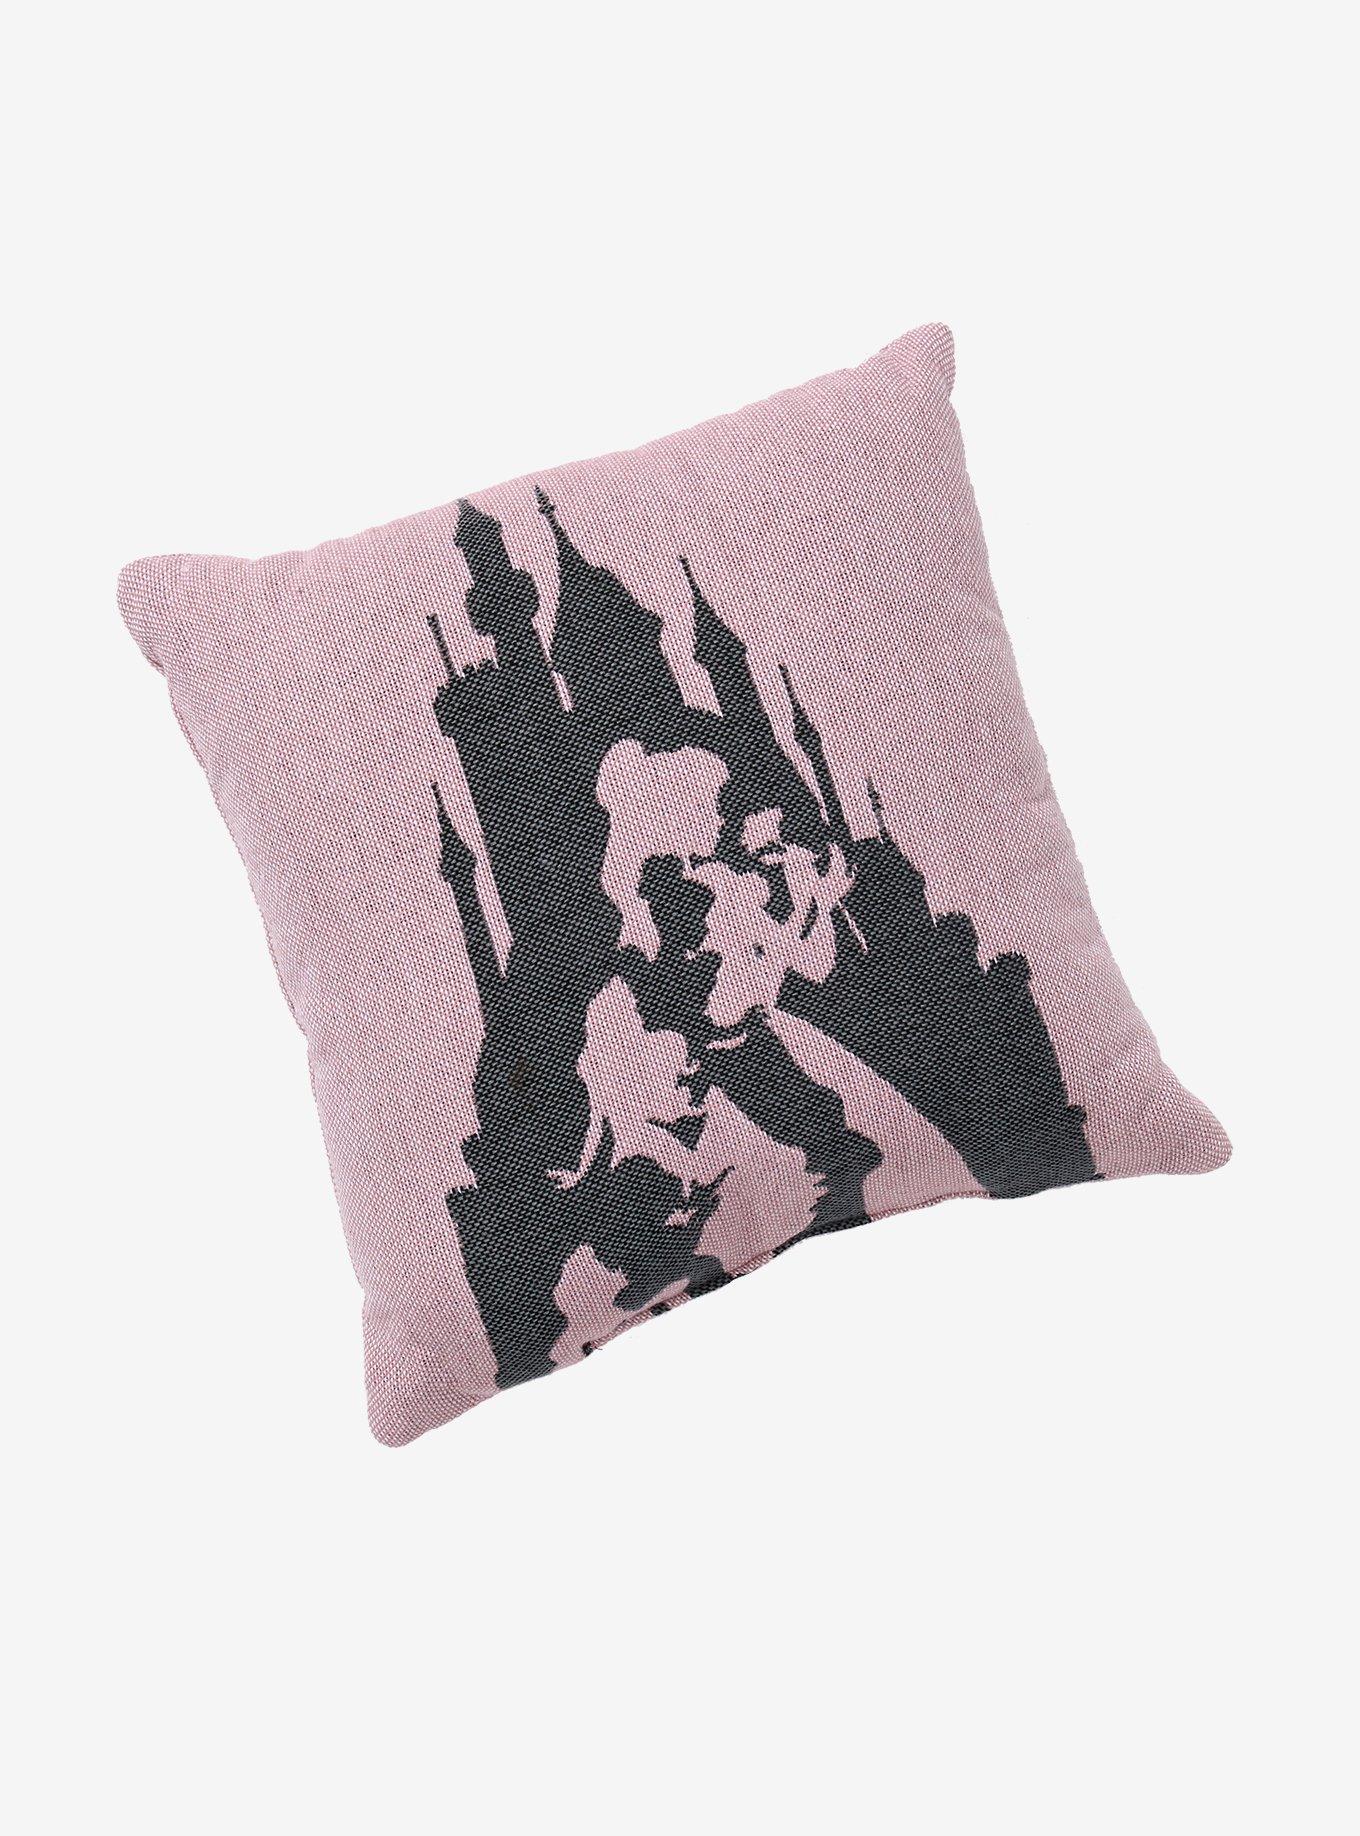 Disney Princess Silhouette Tapestry Pillow, , hi-res